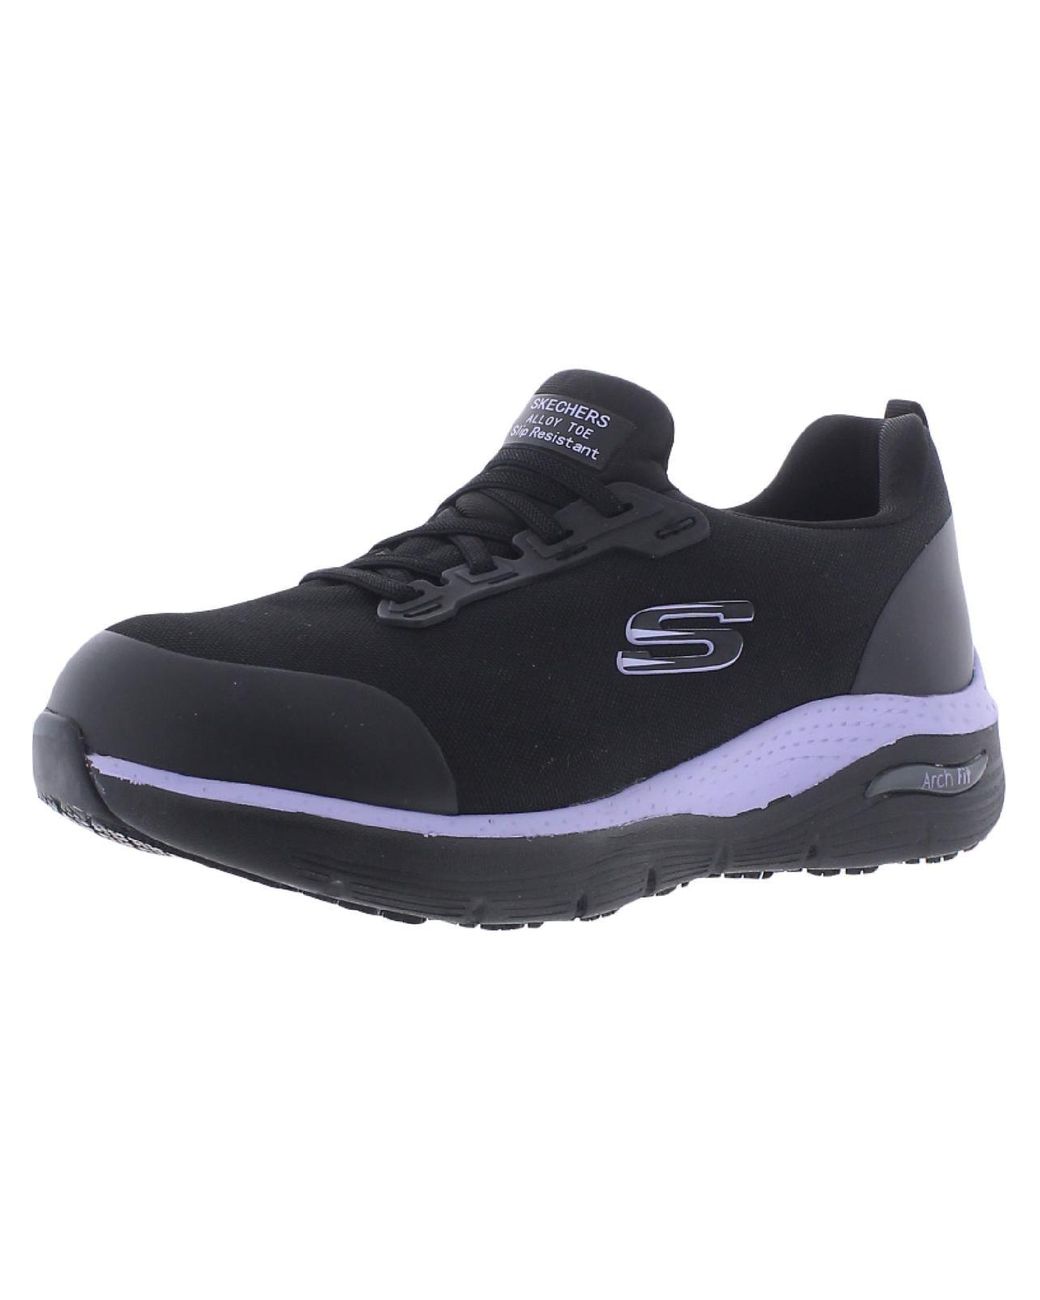 Skechers Arch Fit Sr - Evzan Steel Toe Slip Resistant Work And Safety ...